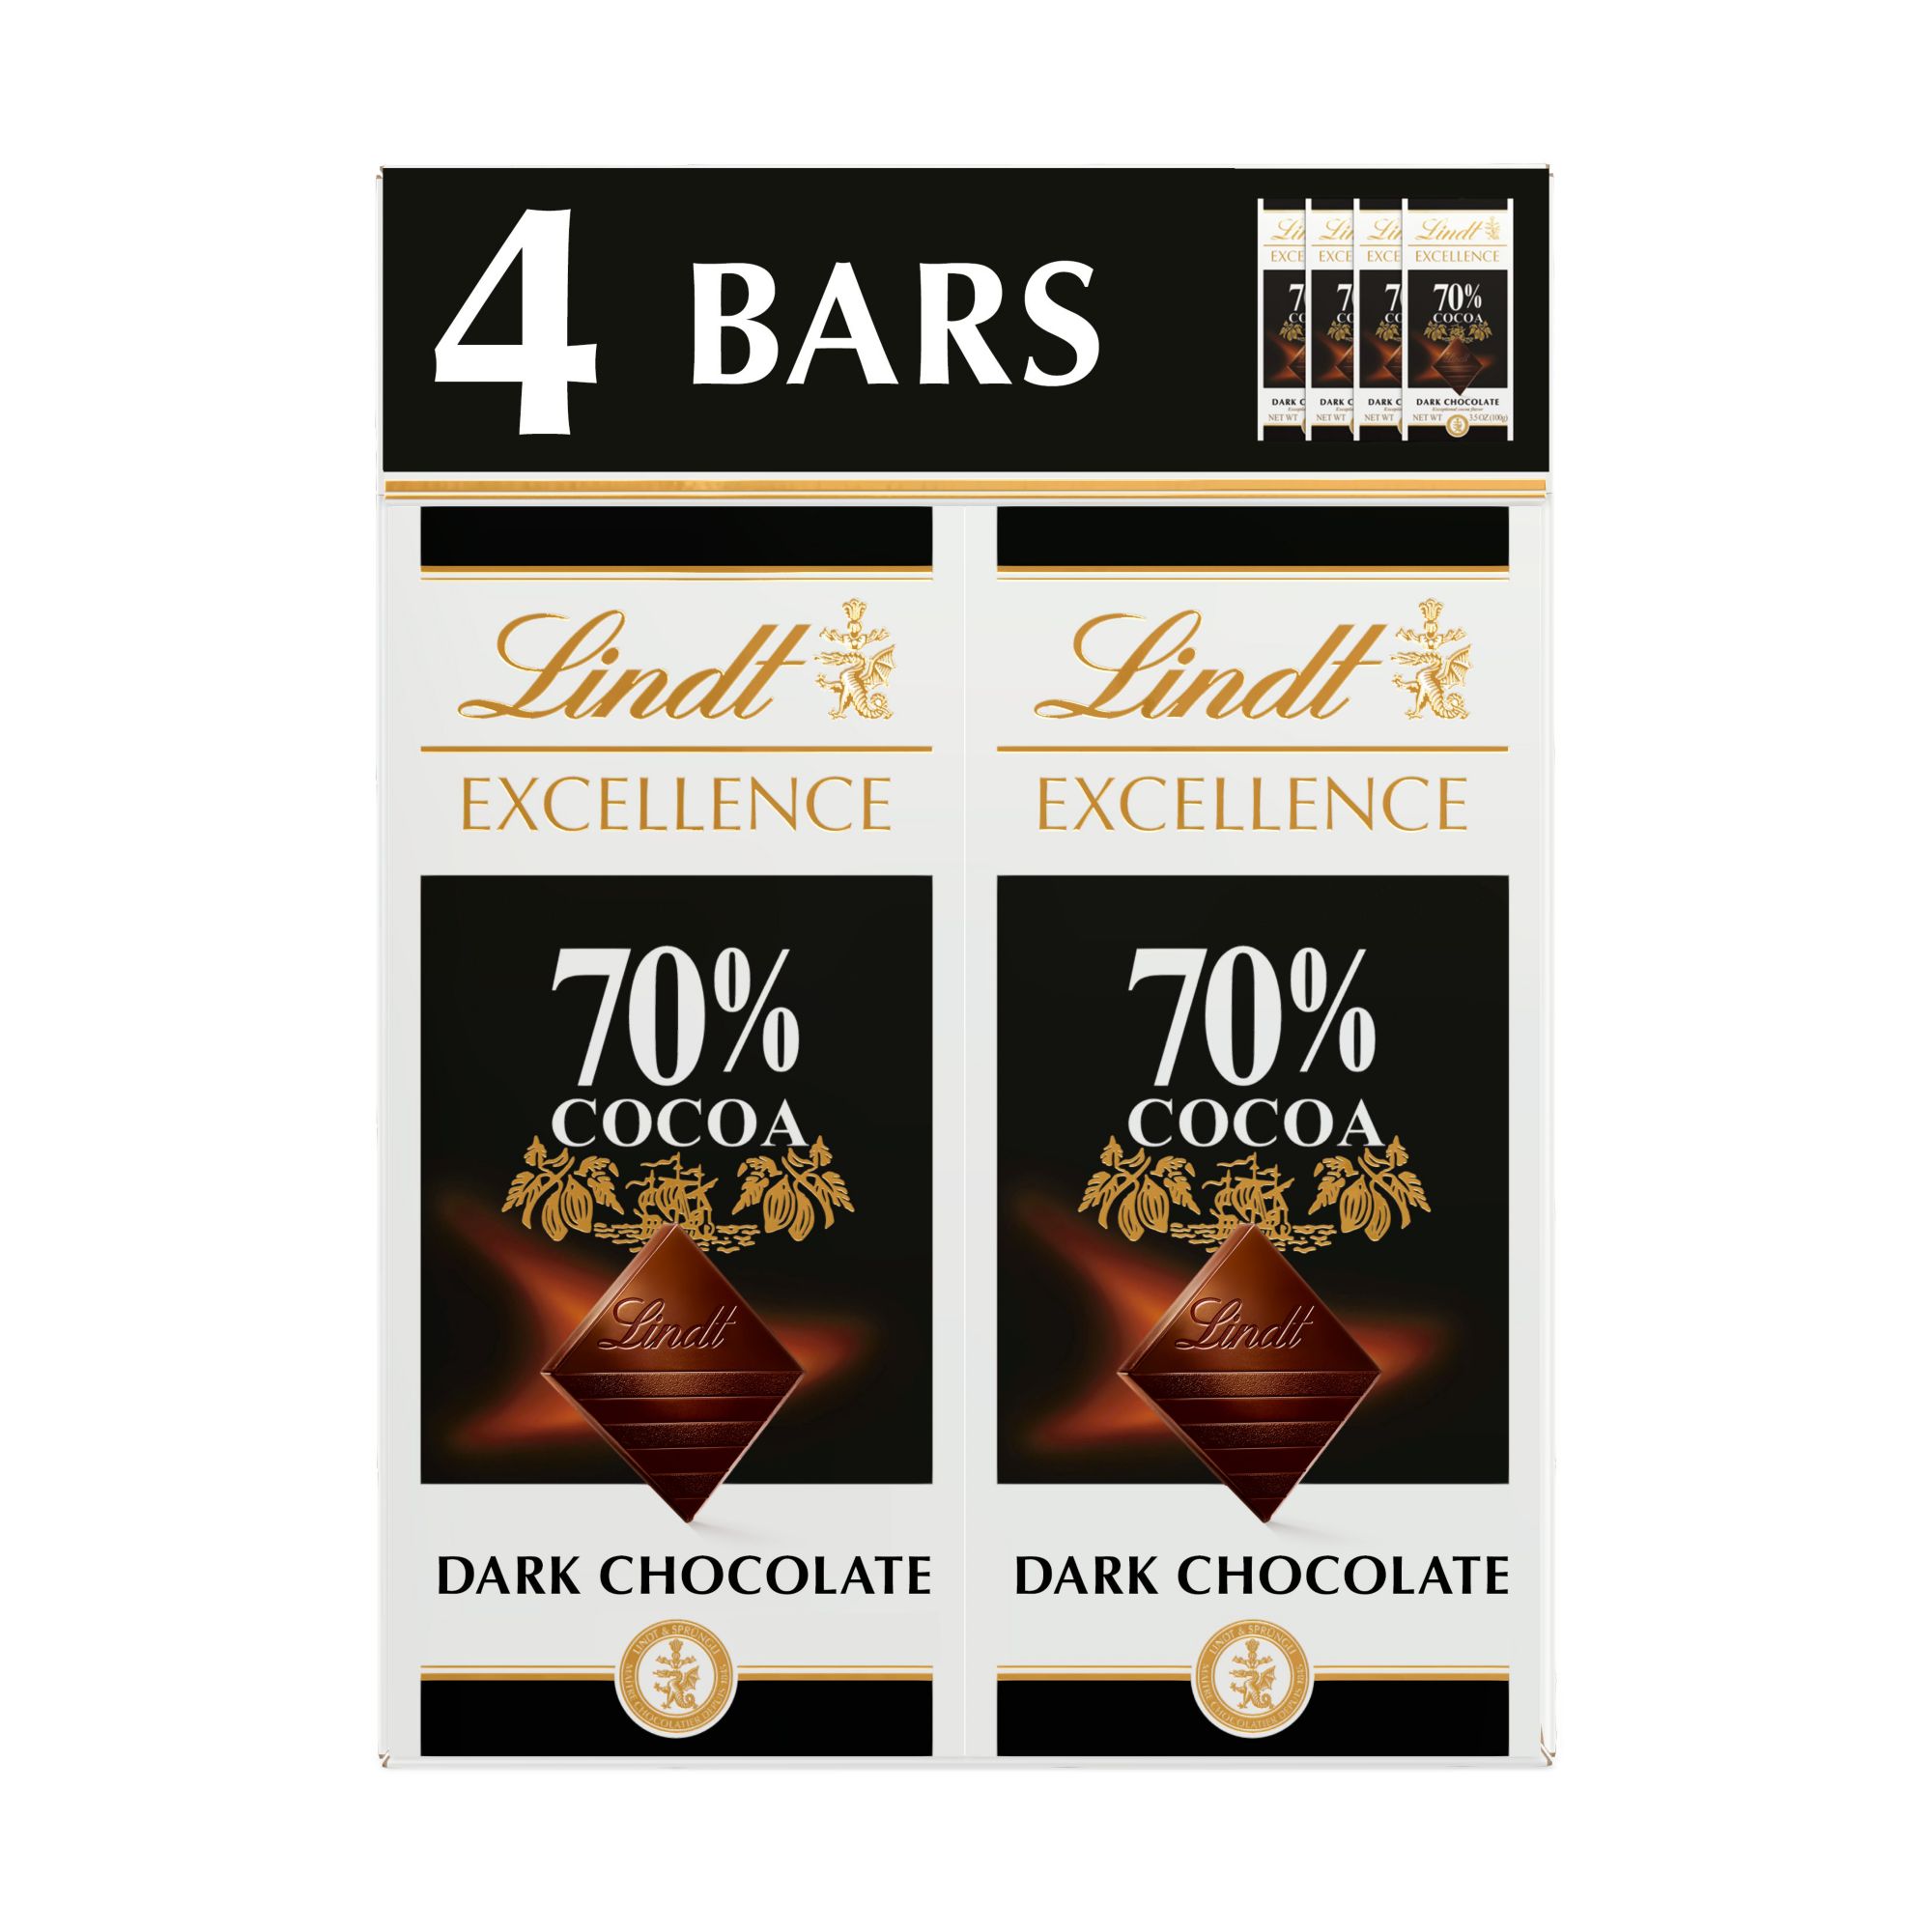 A Touch of Sea Salt Dark Chocolate EXCELLENCE Bar (3.5 oz)